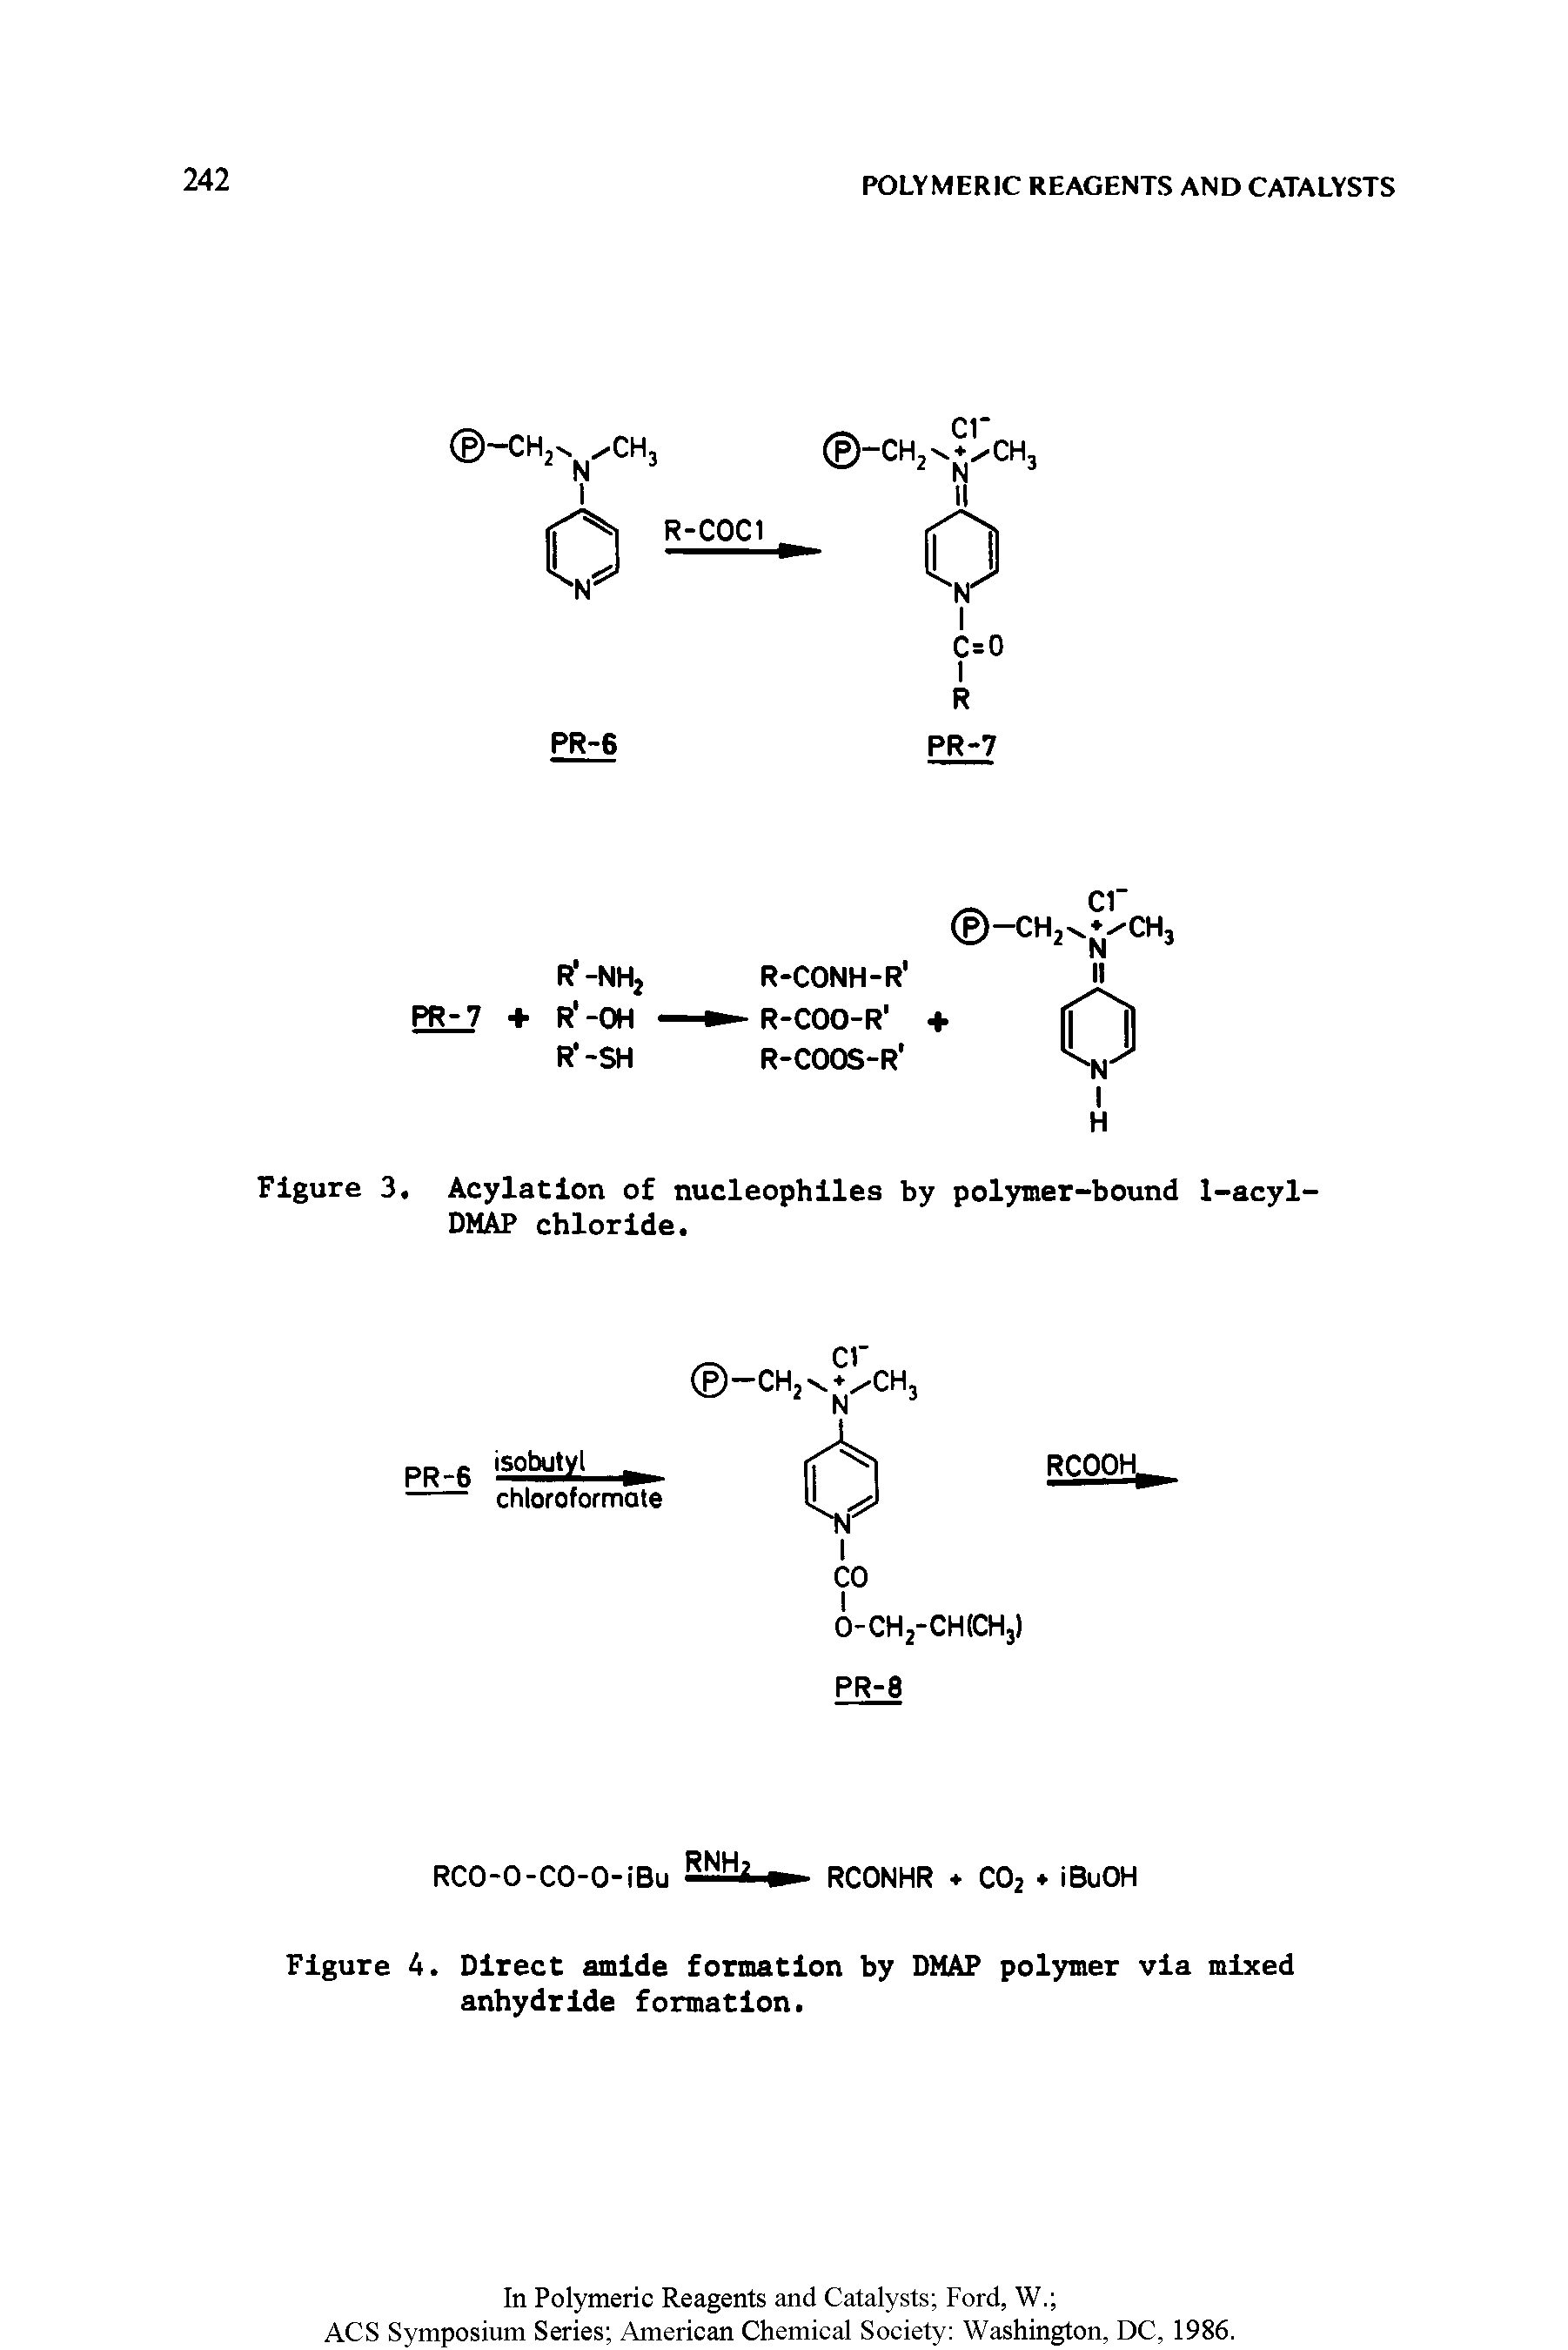 Figure 3, Acylation of nucleophiles by polymer-bound 1-acyl-DMAP chloride.